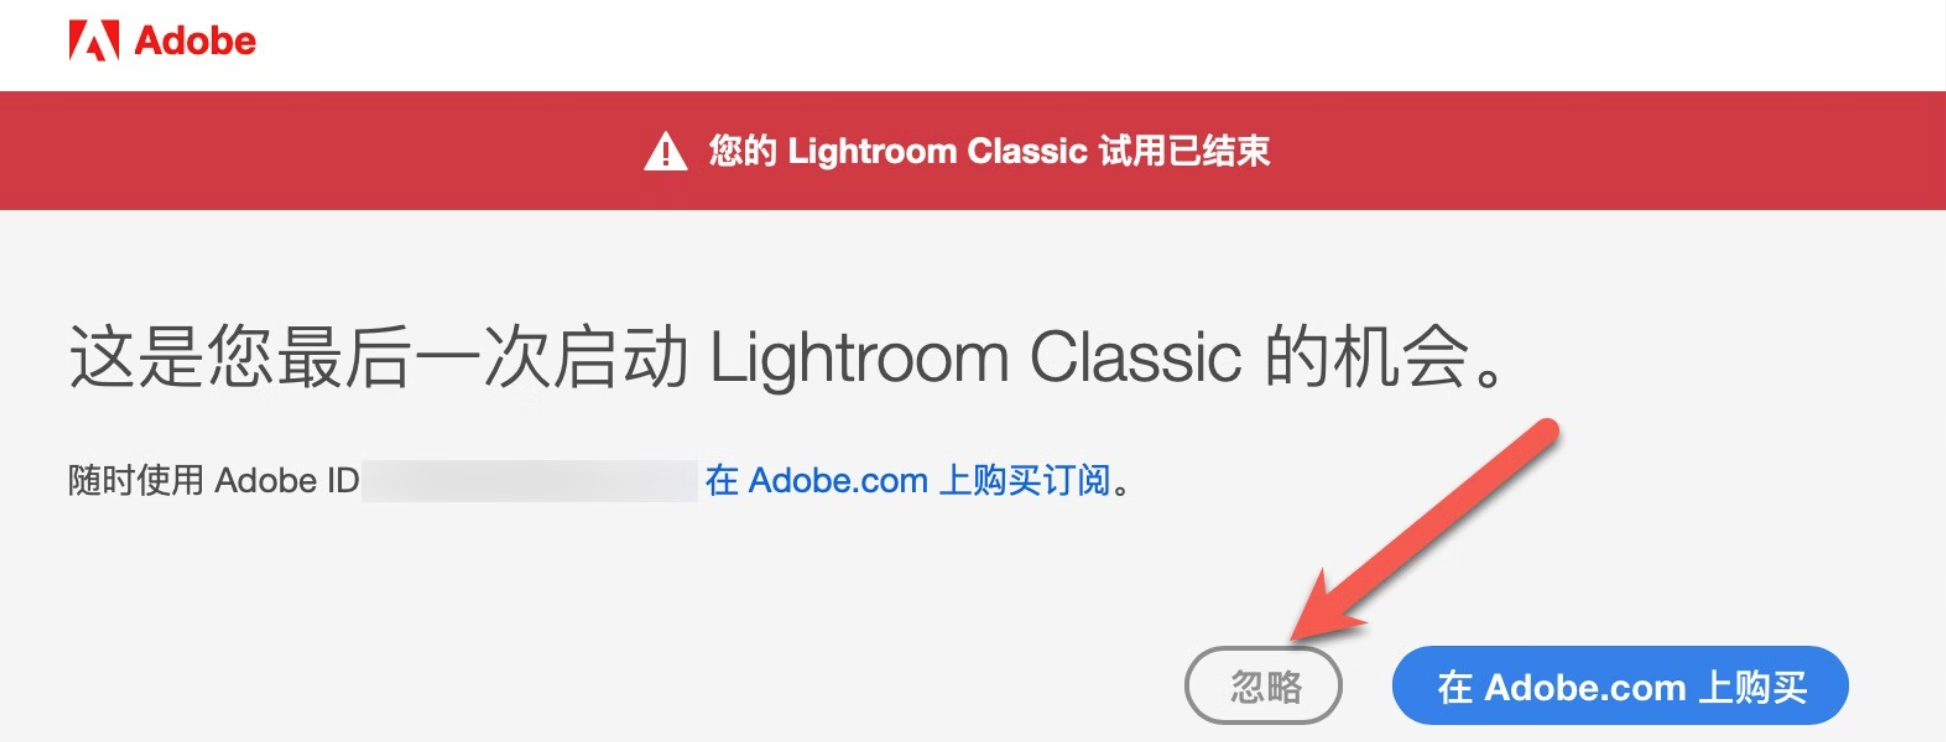 Lightroom Classic 2023 for mac v12.3 中文激活版 Intel/M通用 (lr 2023)